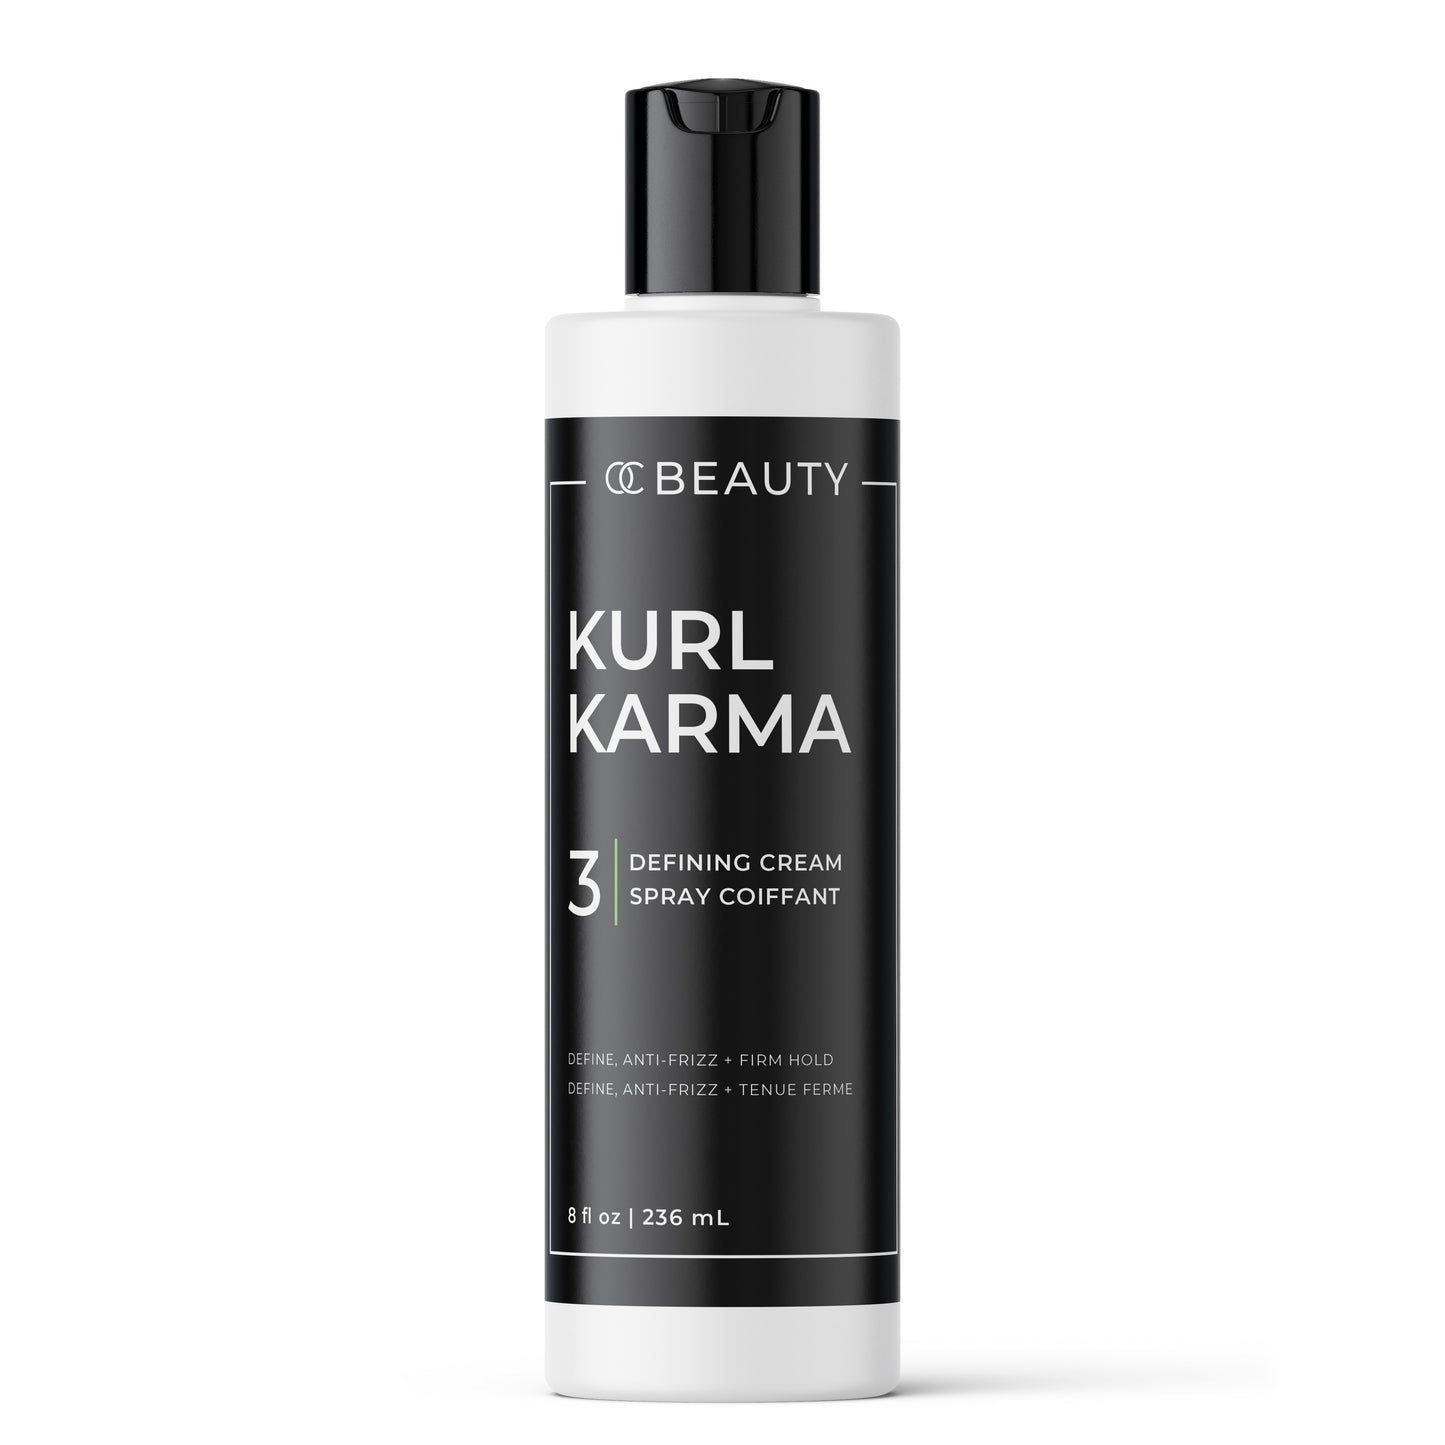 Kurl Karma Defining Cream